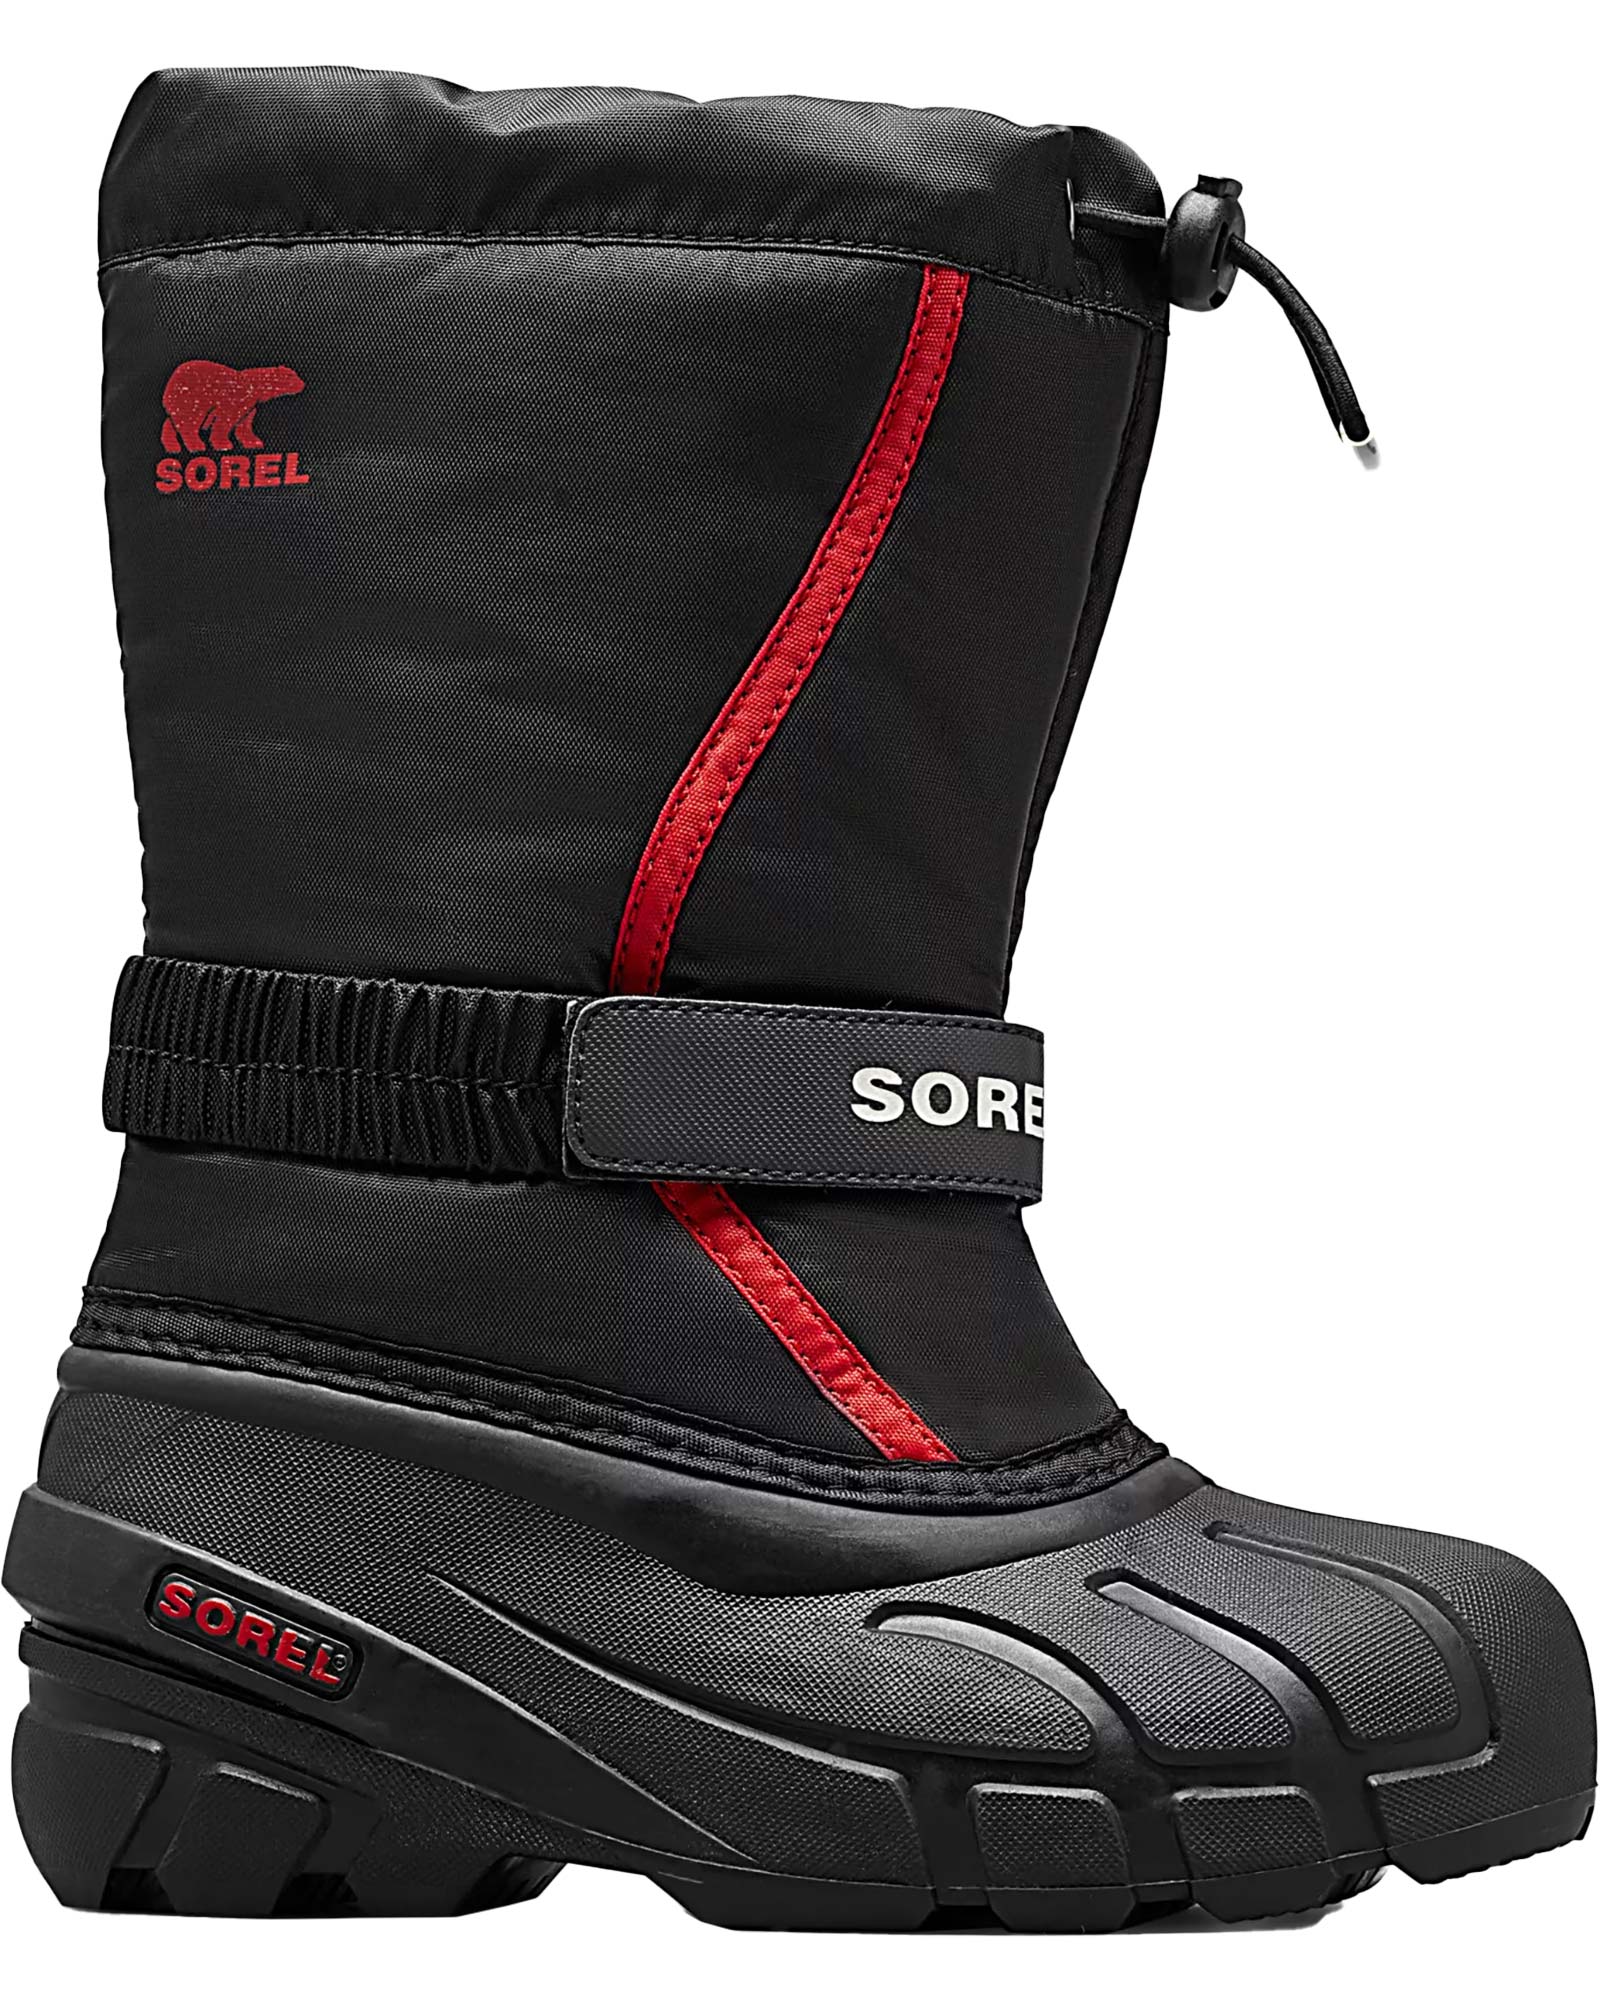 Sorel Flurry Kids’ Snow Boots - Black/Bright Red UK 1